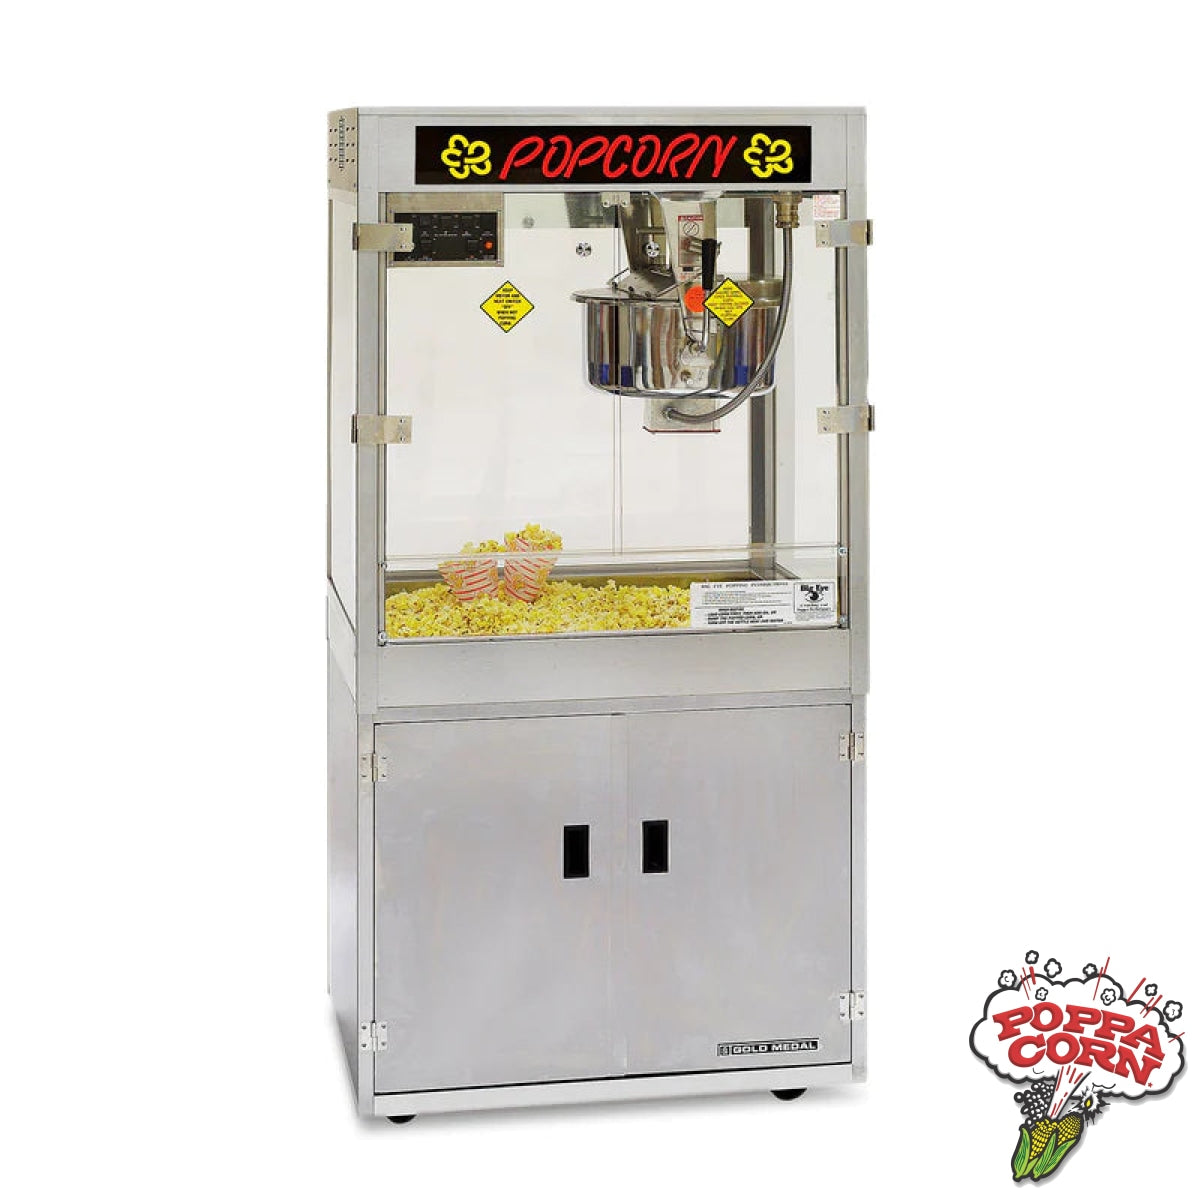 Odyssey 32-oz. Popcorn Machine - GM2670-071 - Poppa Corn Corp